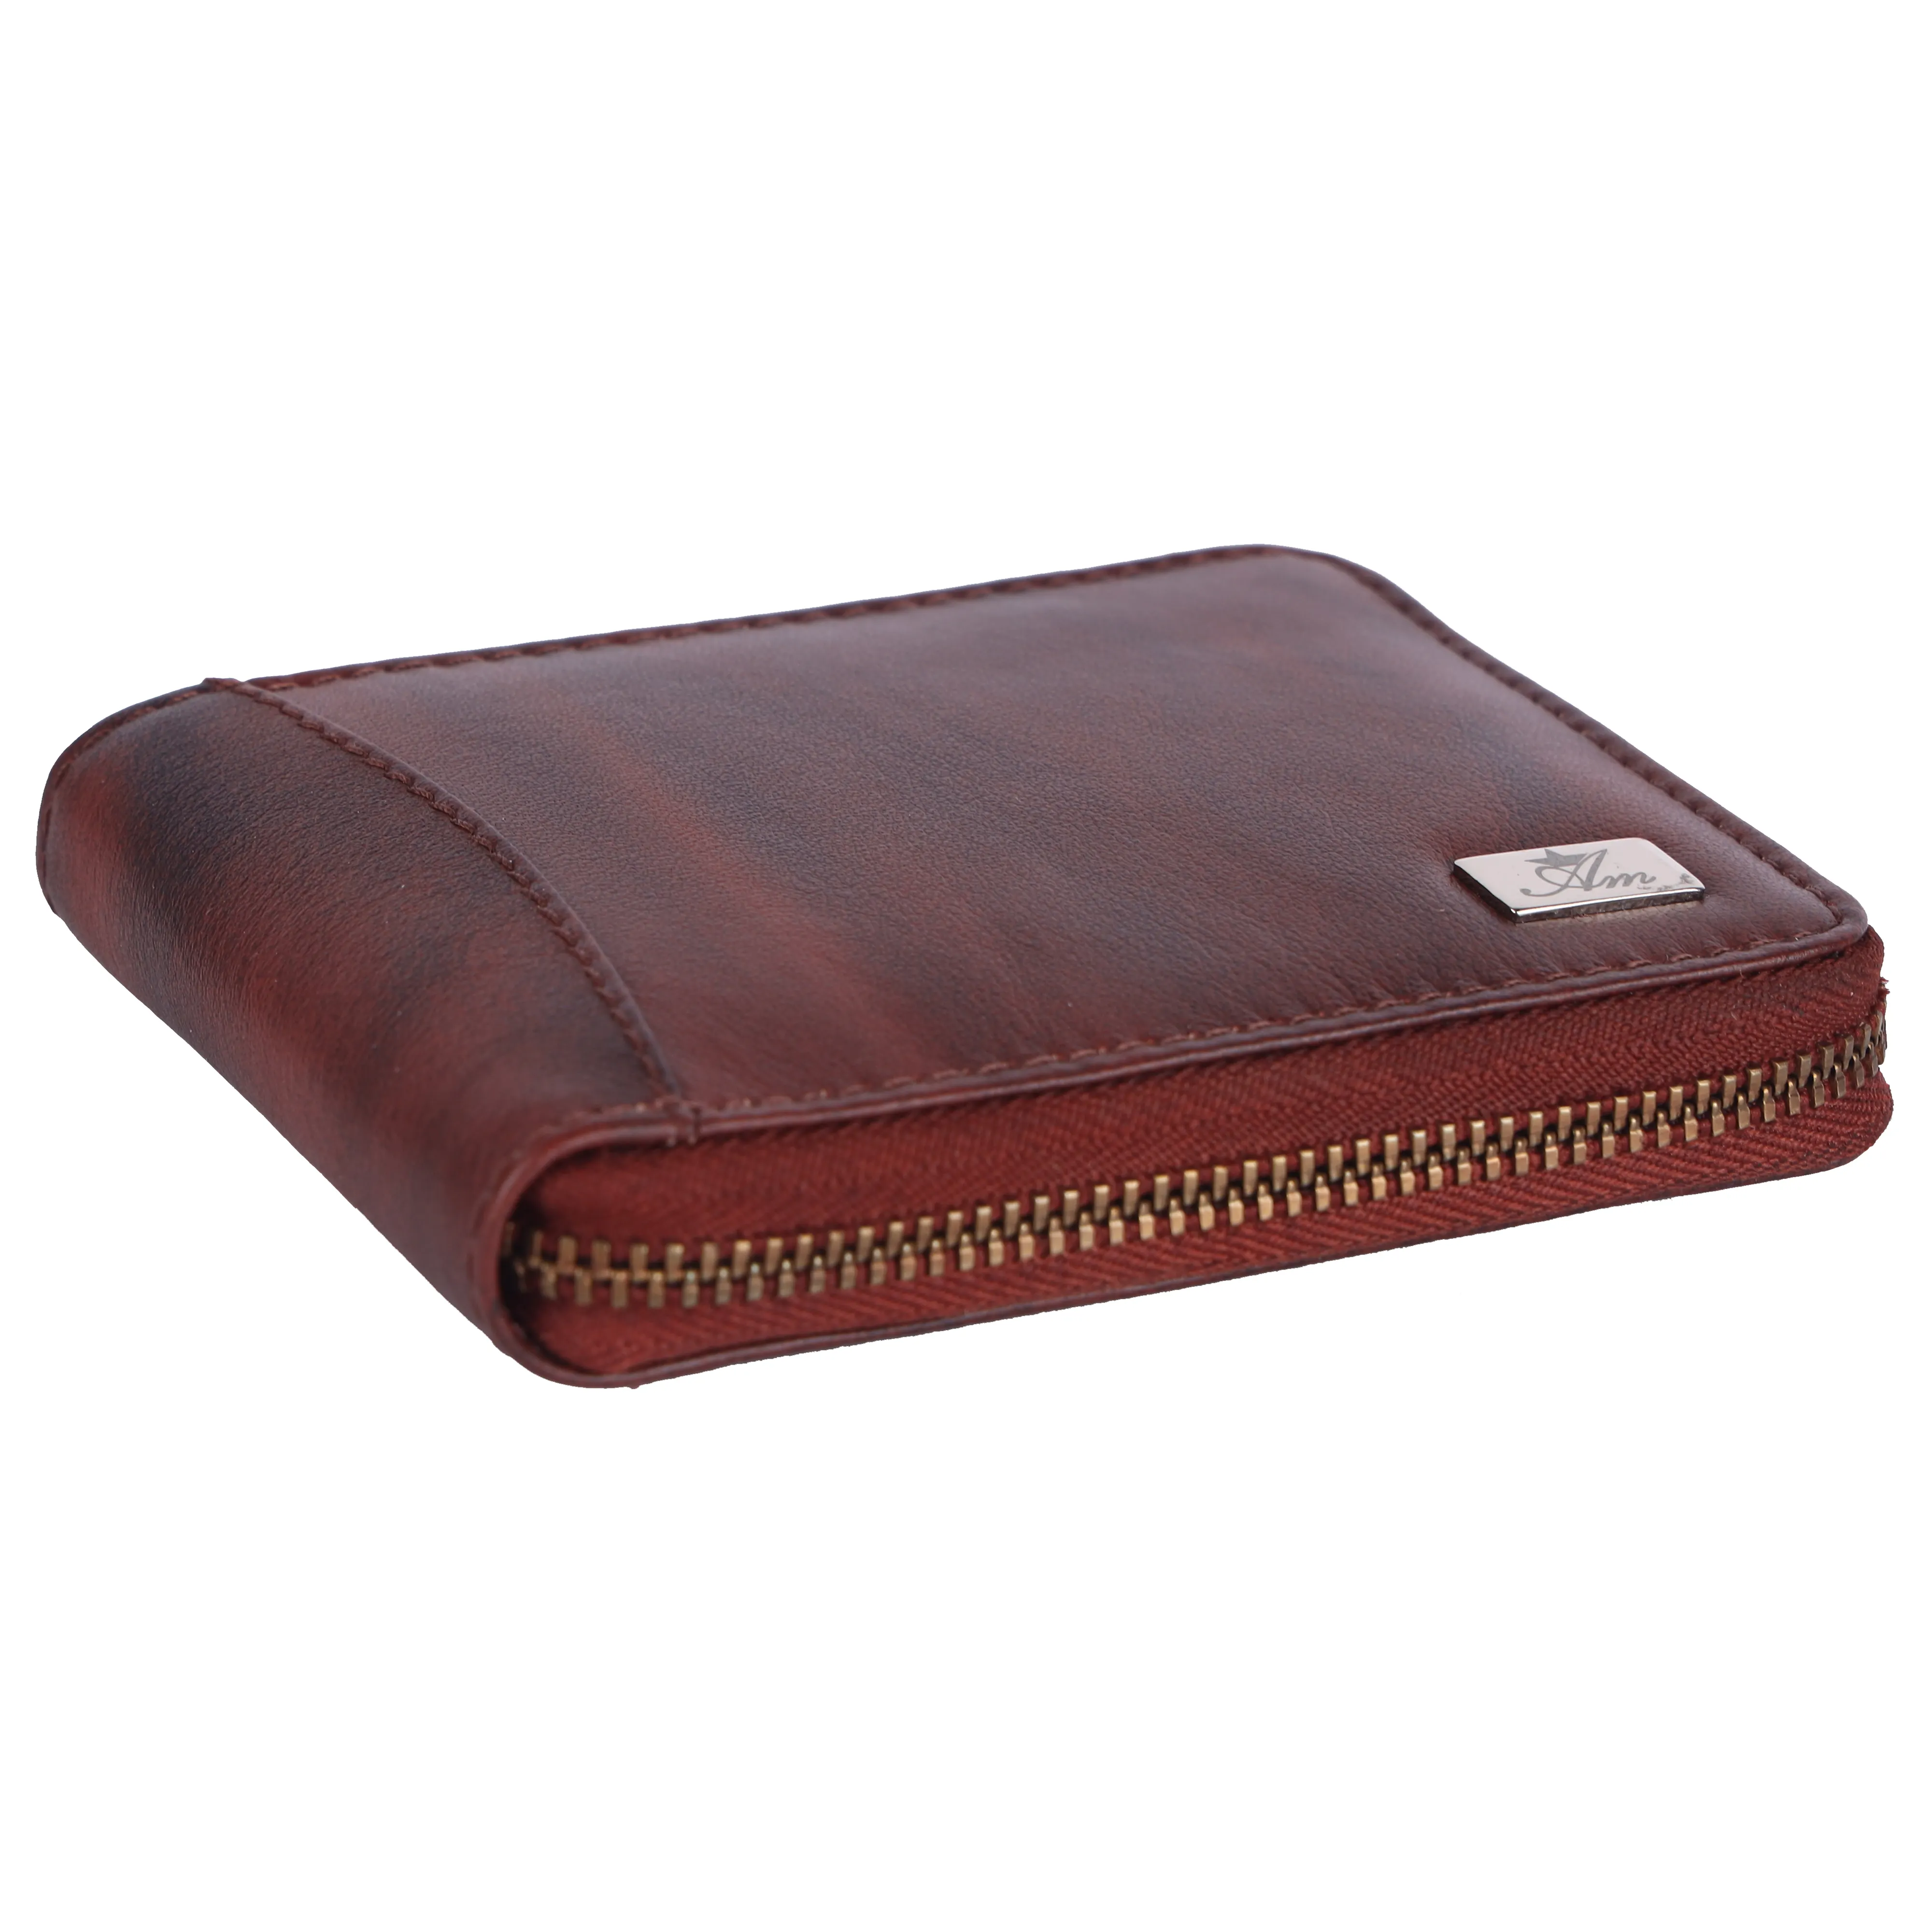 AM Leather Men's Genuine Leather Wallet Top Quality Luxury Wholesale Wallet Purses Fashion Wristlets Wallets For Men's